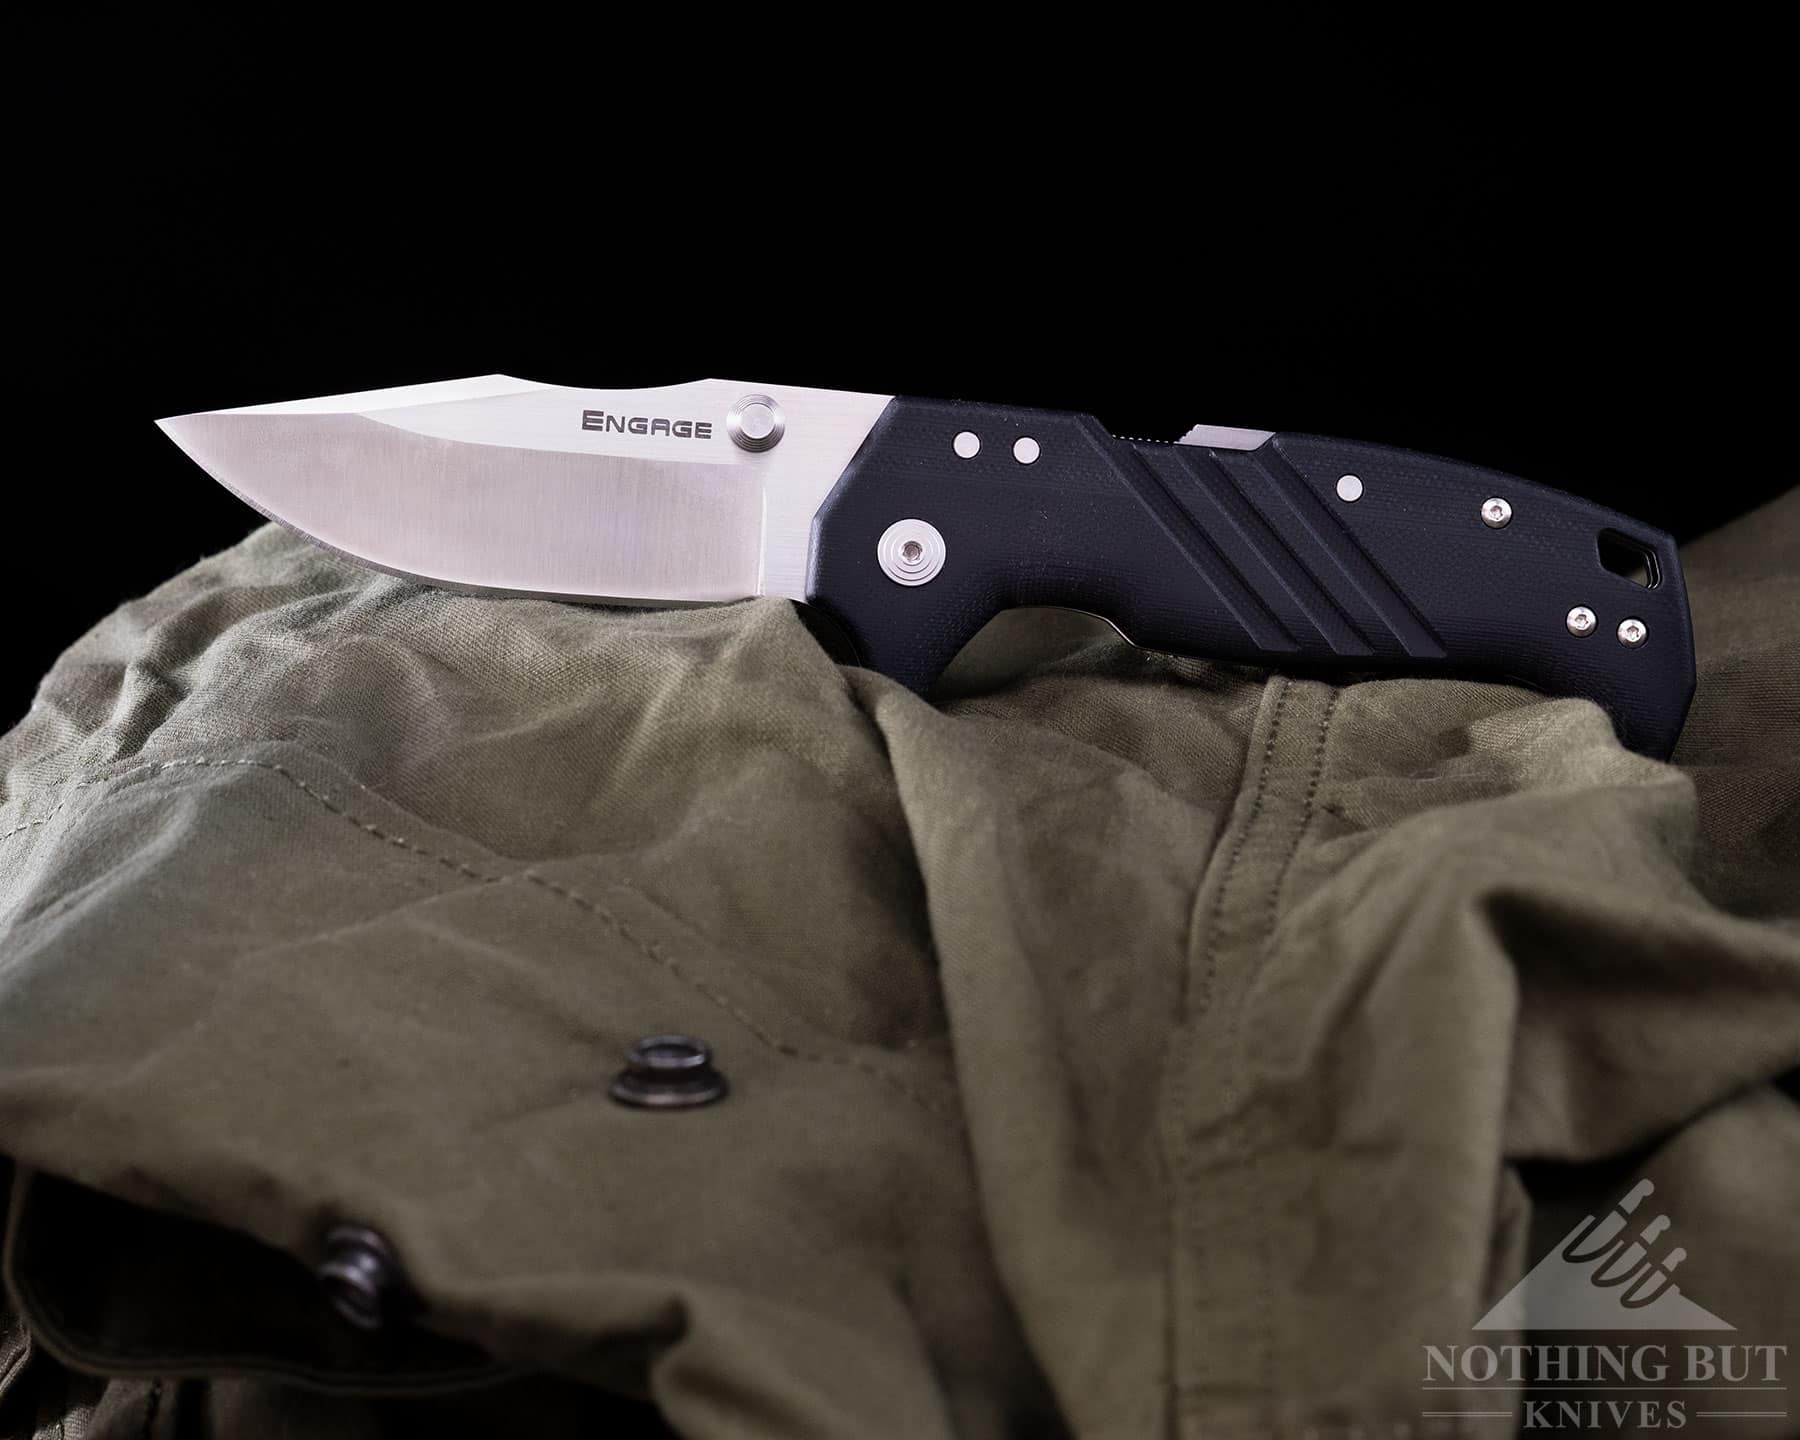 https://www.nothingbutknives.com/wp-content/uploads/2022/09/Cold-Steel-Engage-Tactical-Pocket-Knife.jpg